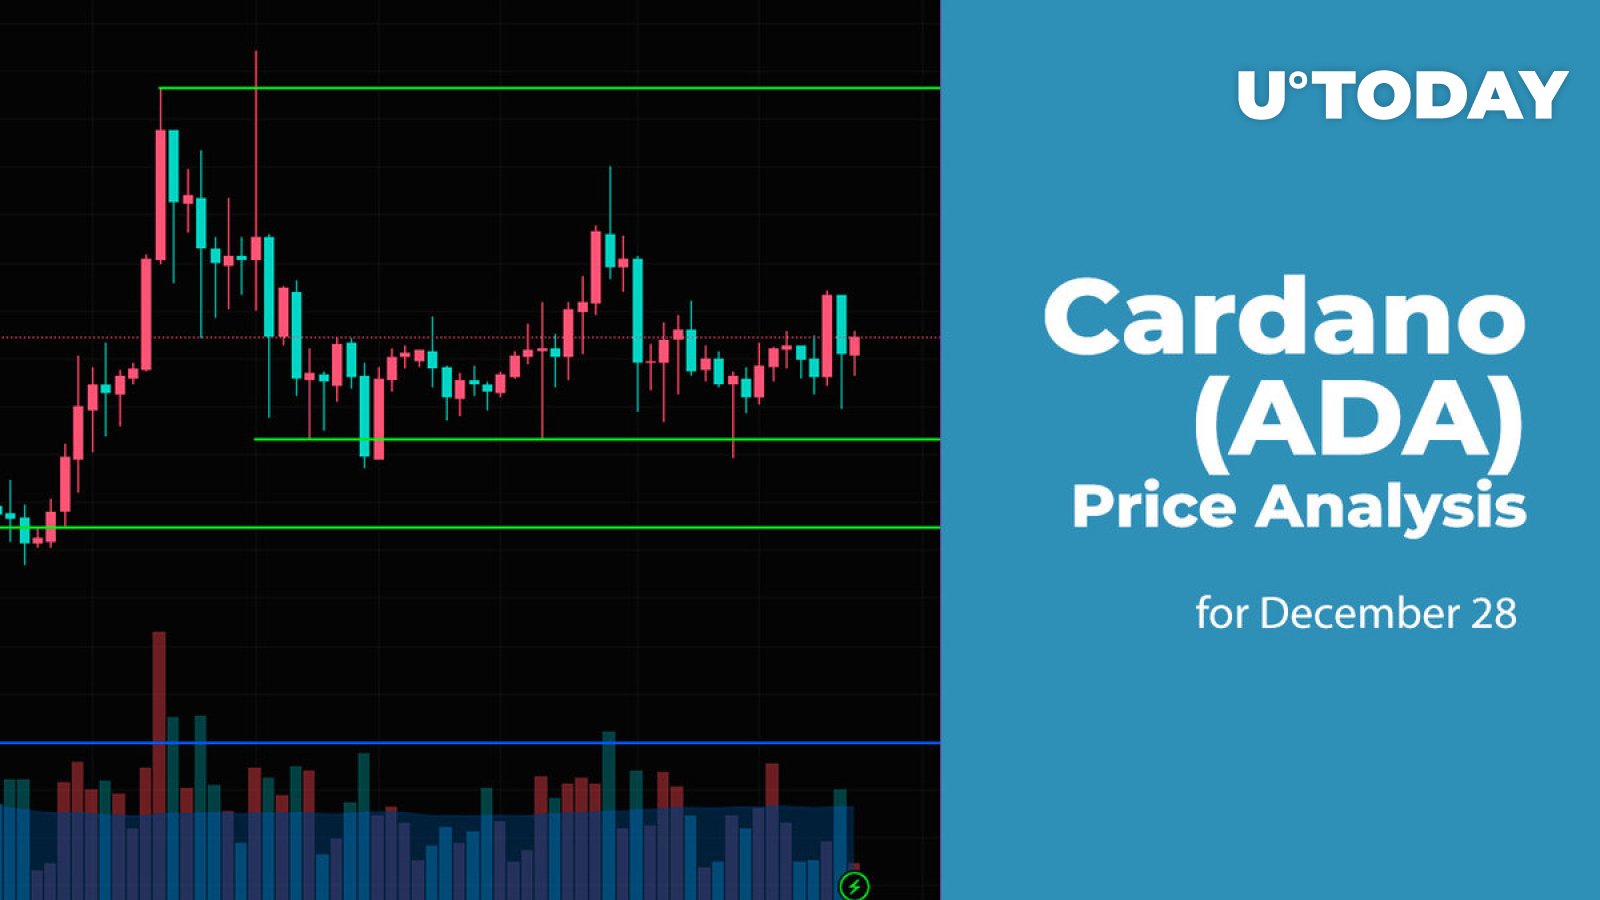 Cardano (ADA) Price Analysis for December 28